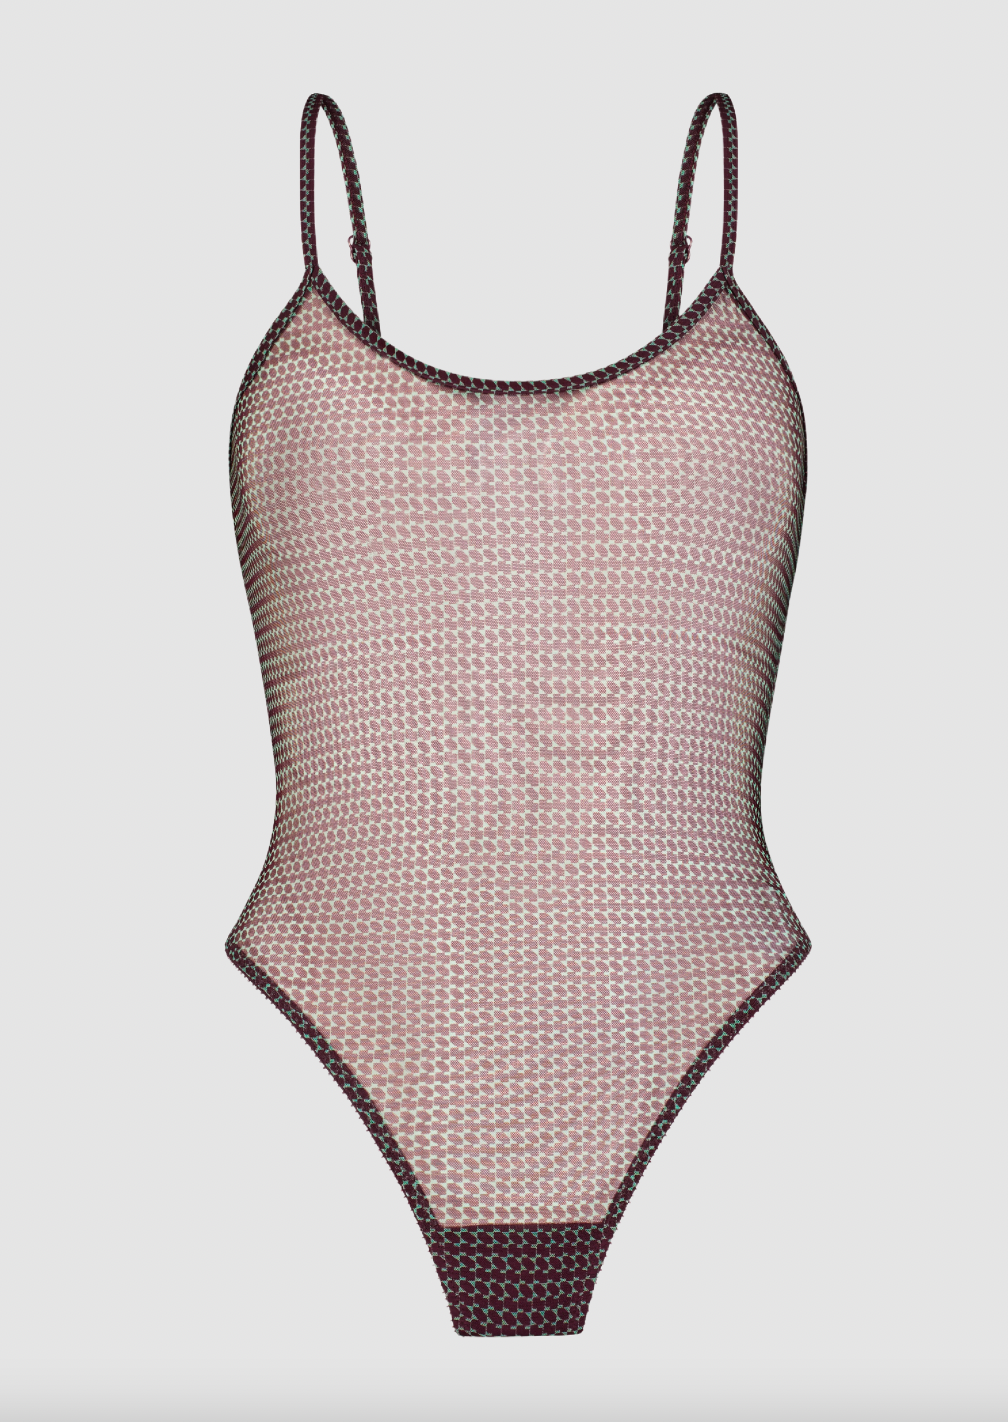 Product Image for Fonda Bodysuit, Pistachio/Vino